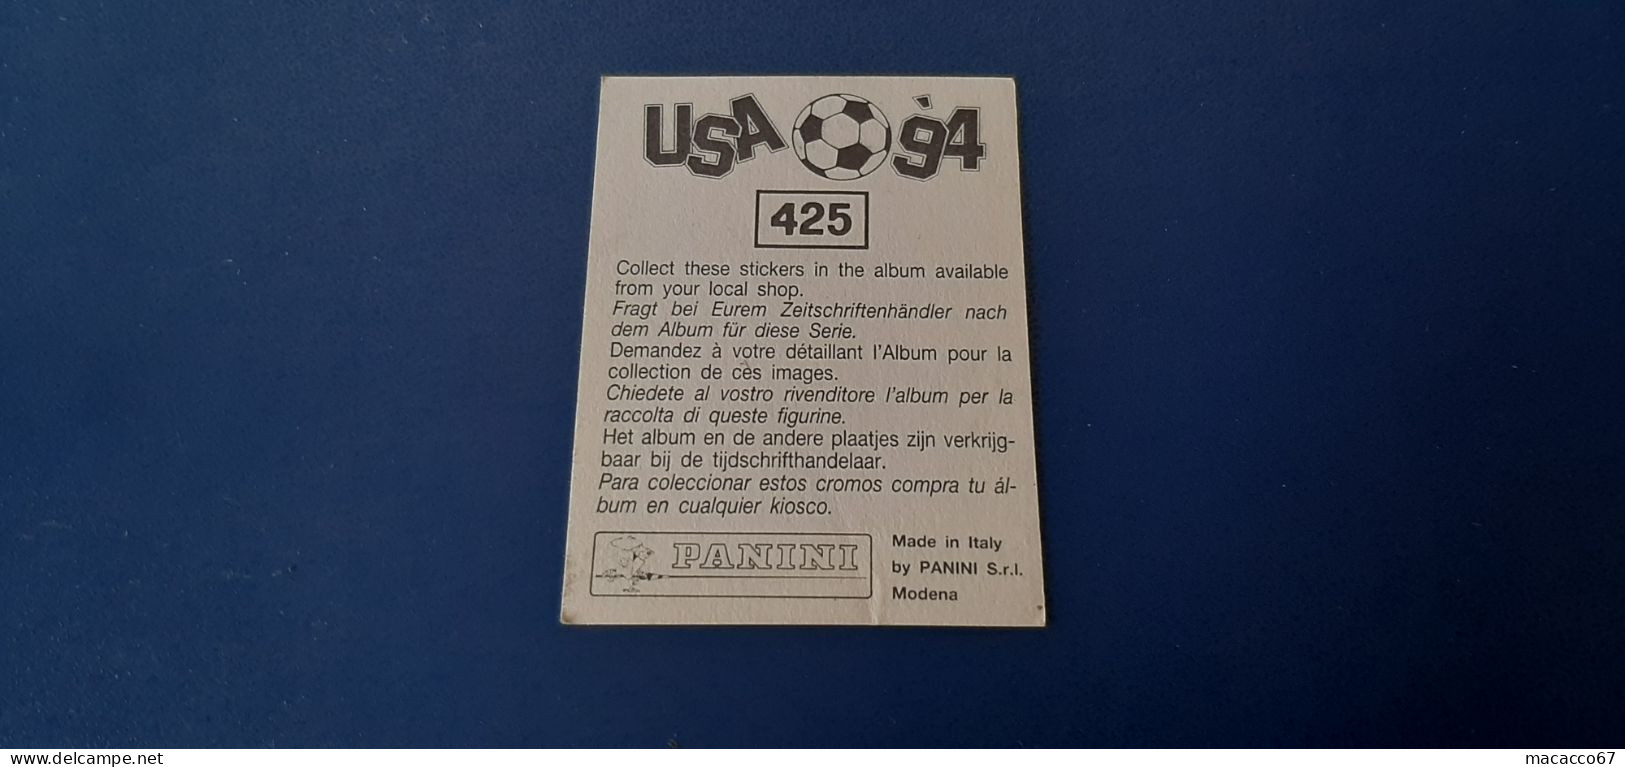 Figurina Panini WM USA 94 - 425 Jonk Olanda - Italian Edition